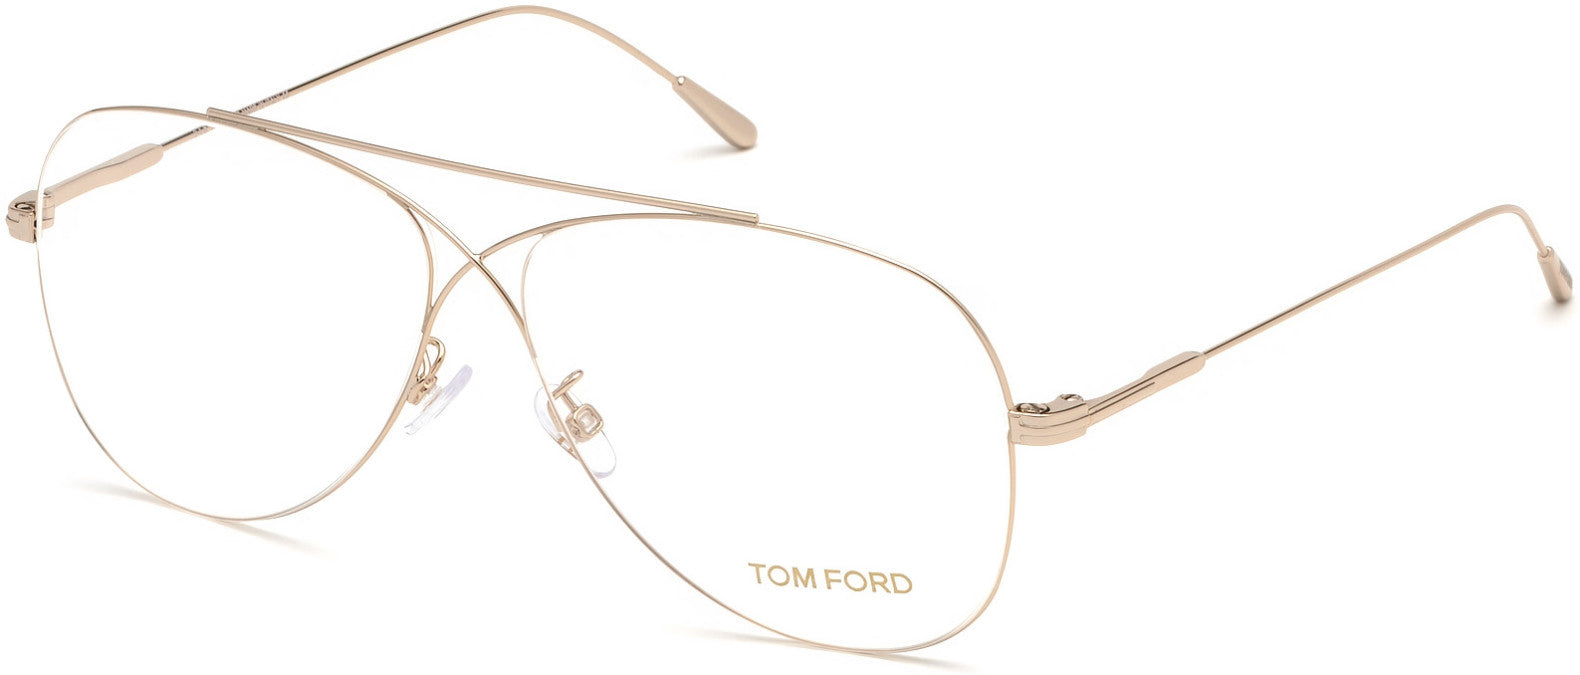 Tom Ford FT5531 Butterfly Eyeglasses 028-028 - Shiny Rose Gold, Shiny Rose Gold "t" Logo